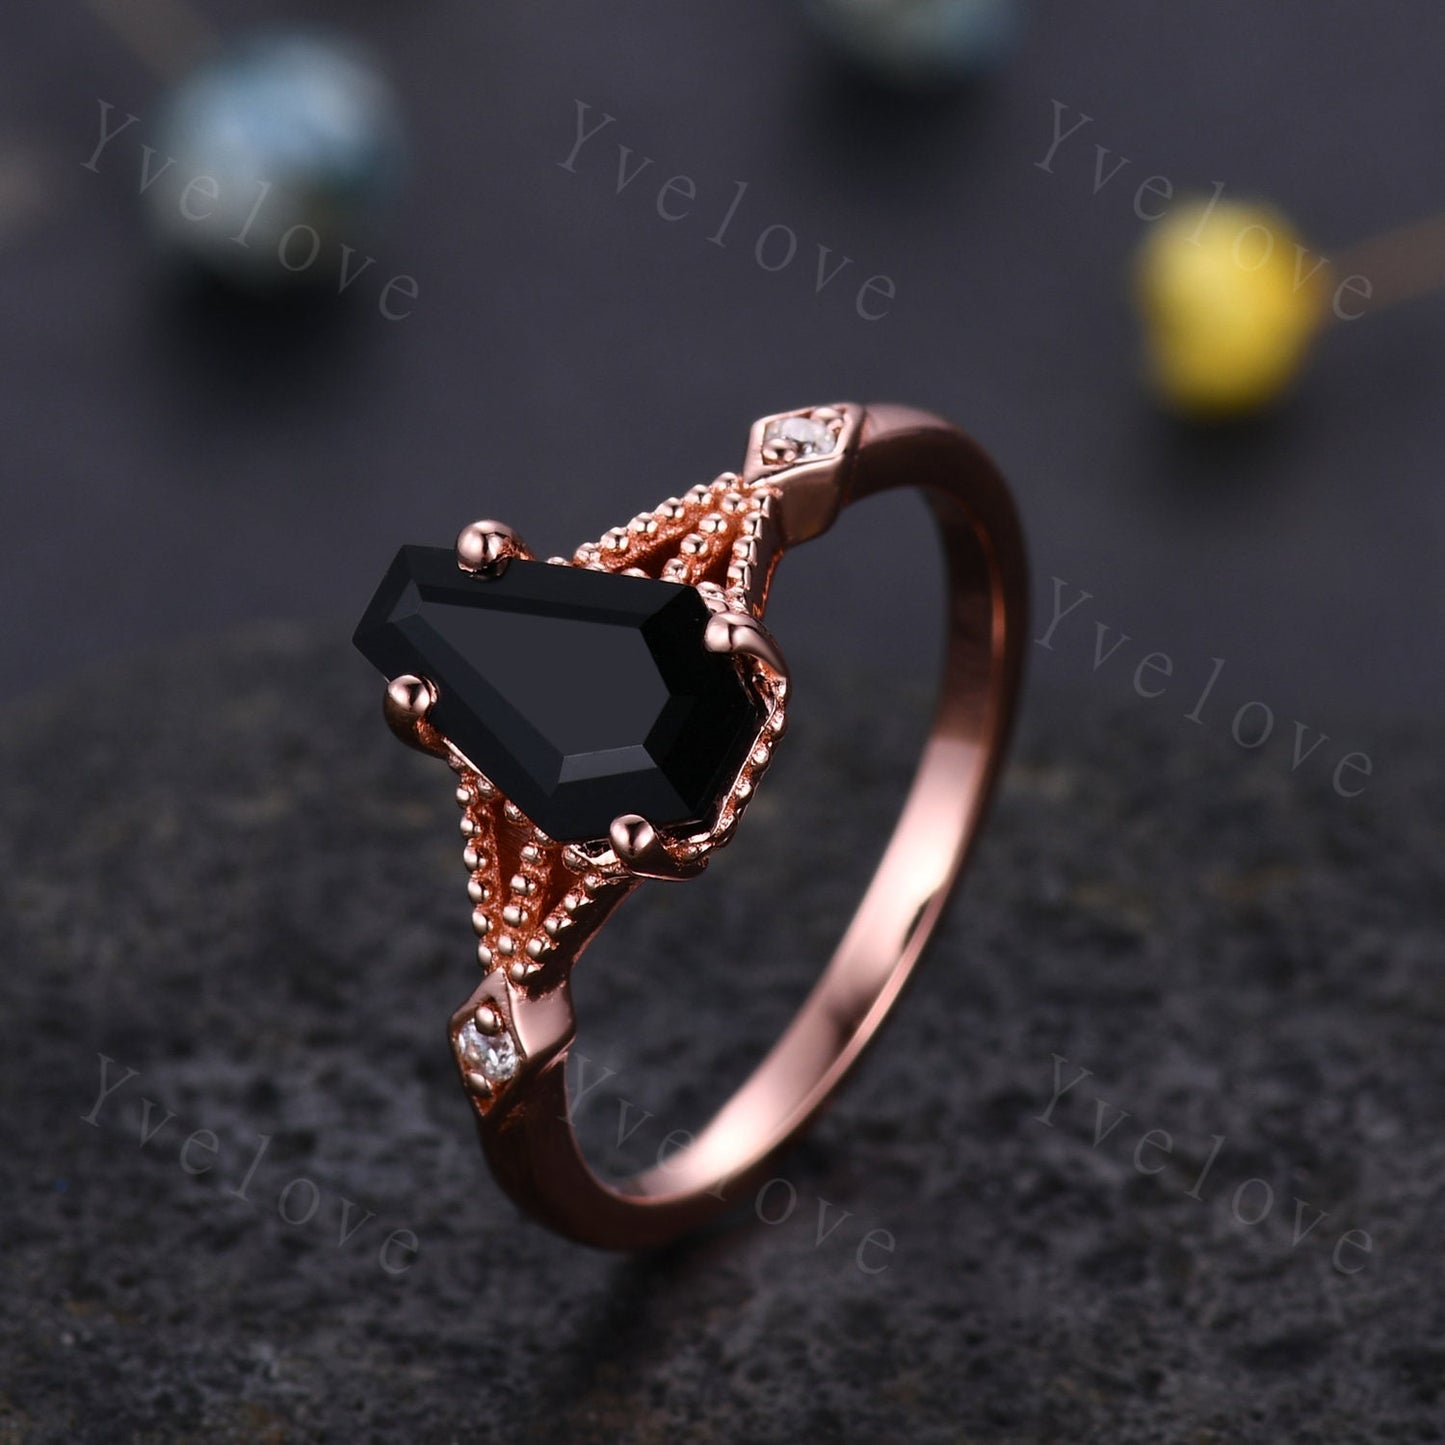 Vintage Coffin black onyx ring diamond wedding ring Unique black onyx engagement ring women rose gold diamond matching band bridal ring gift